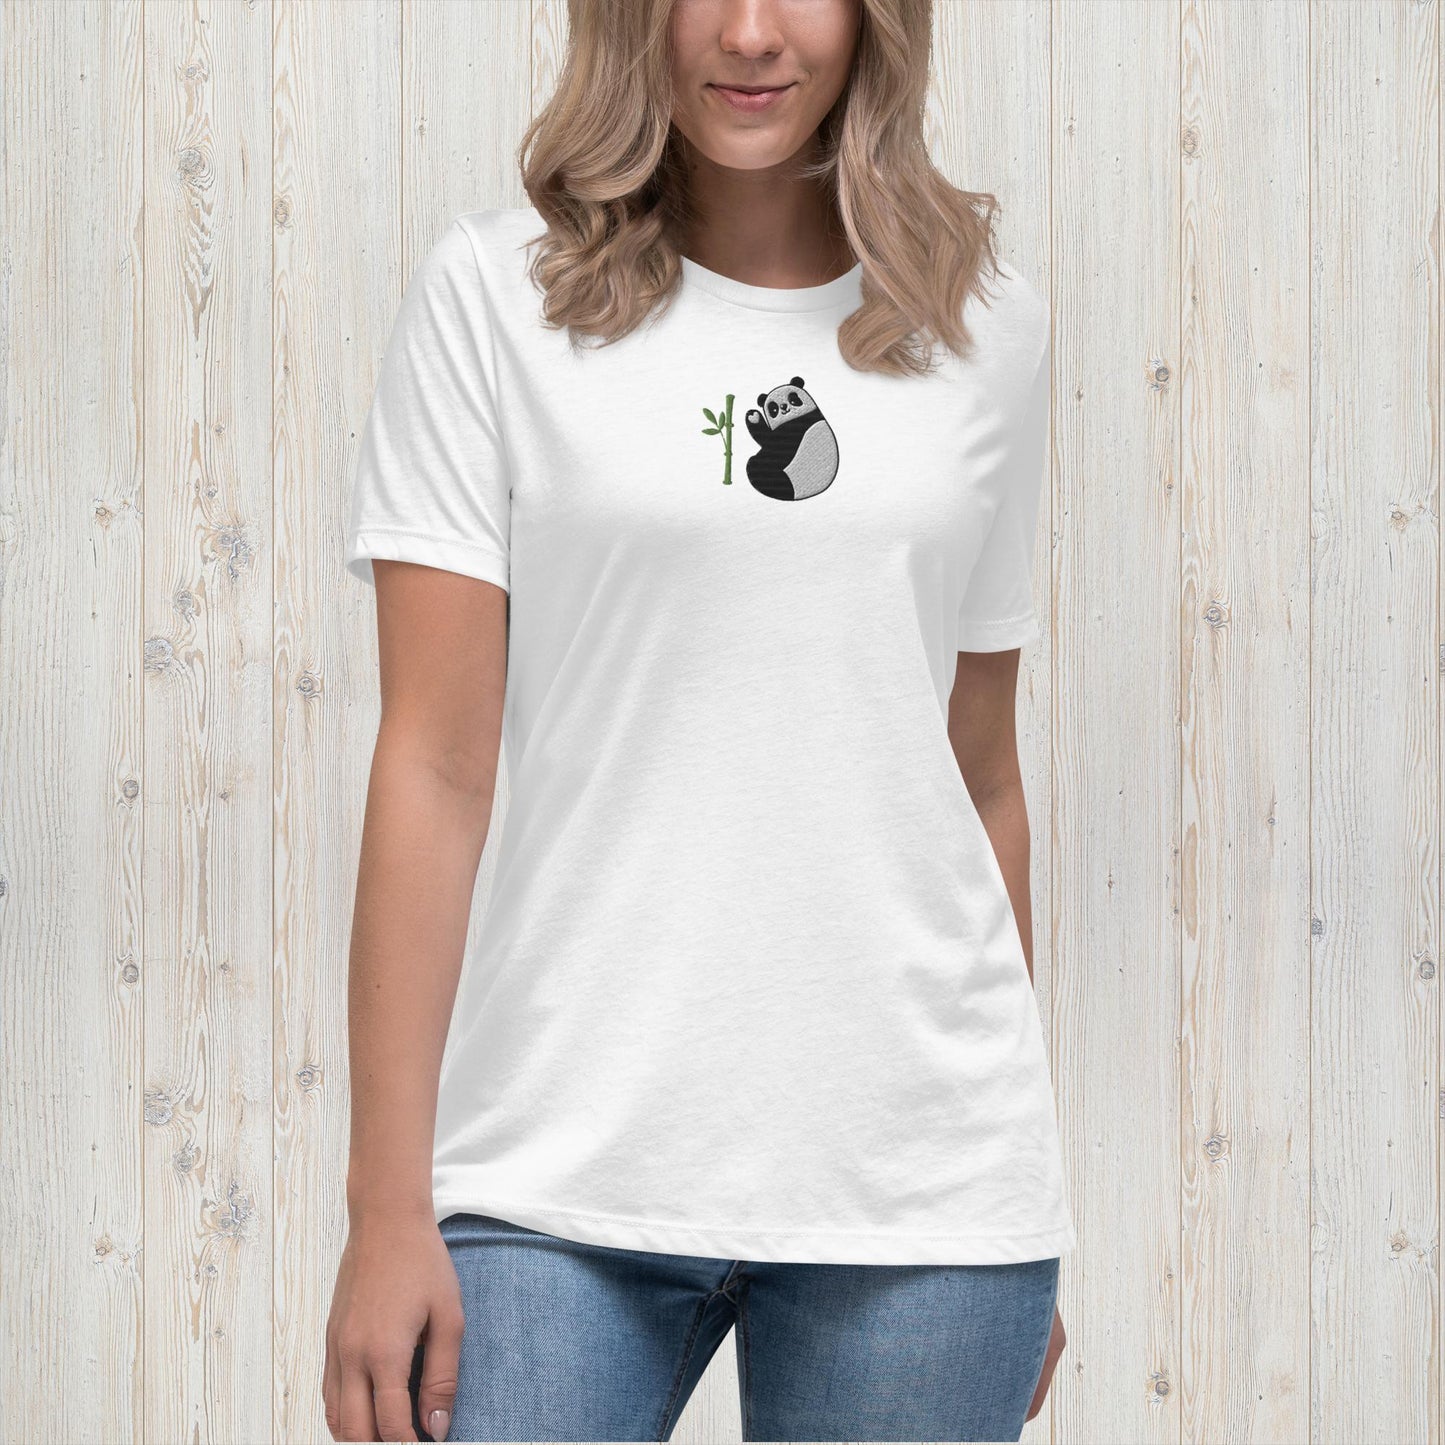 Camiseta bordada de oso panda mujer